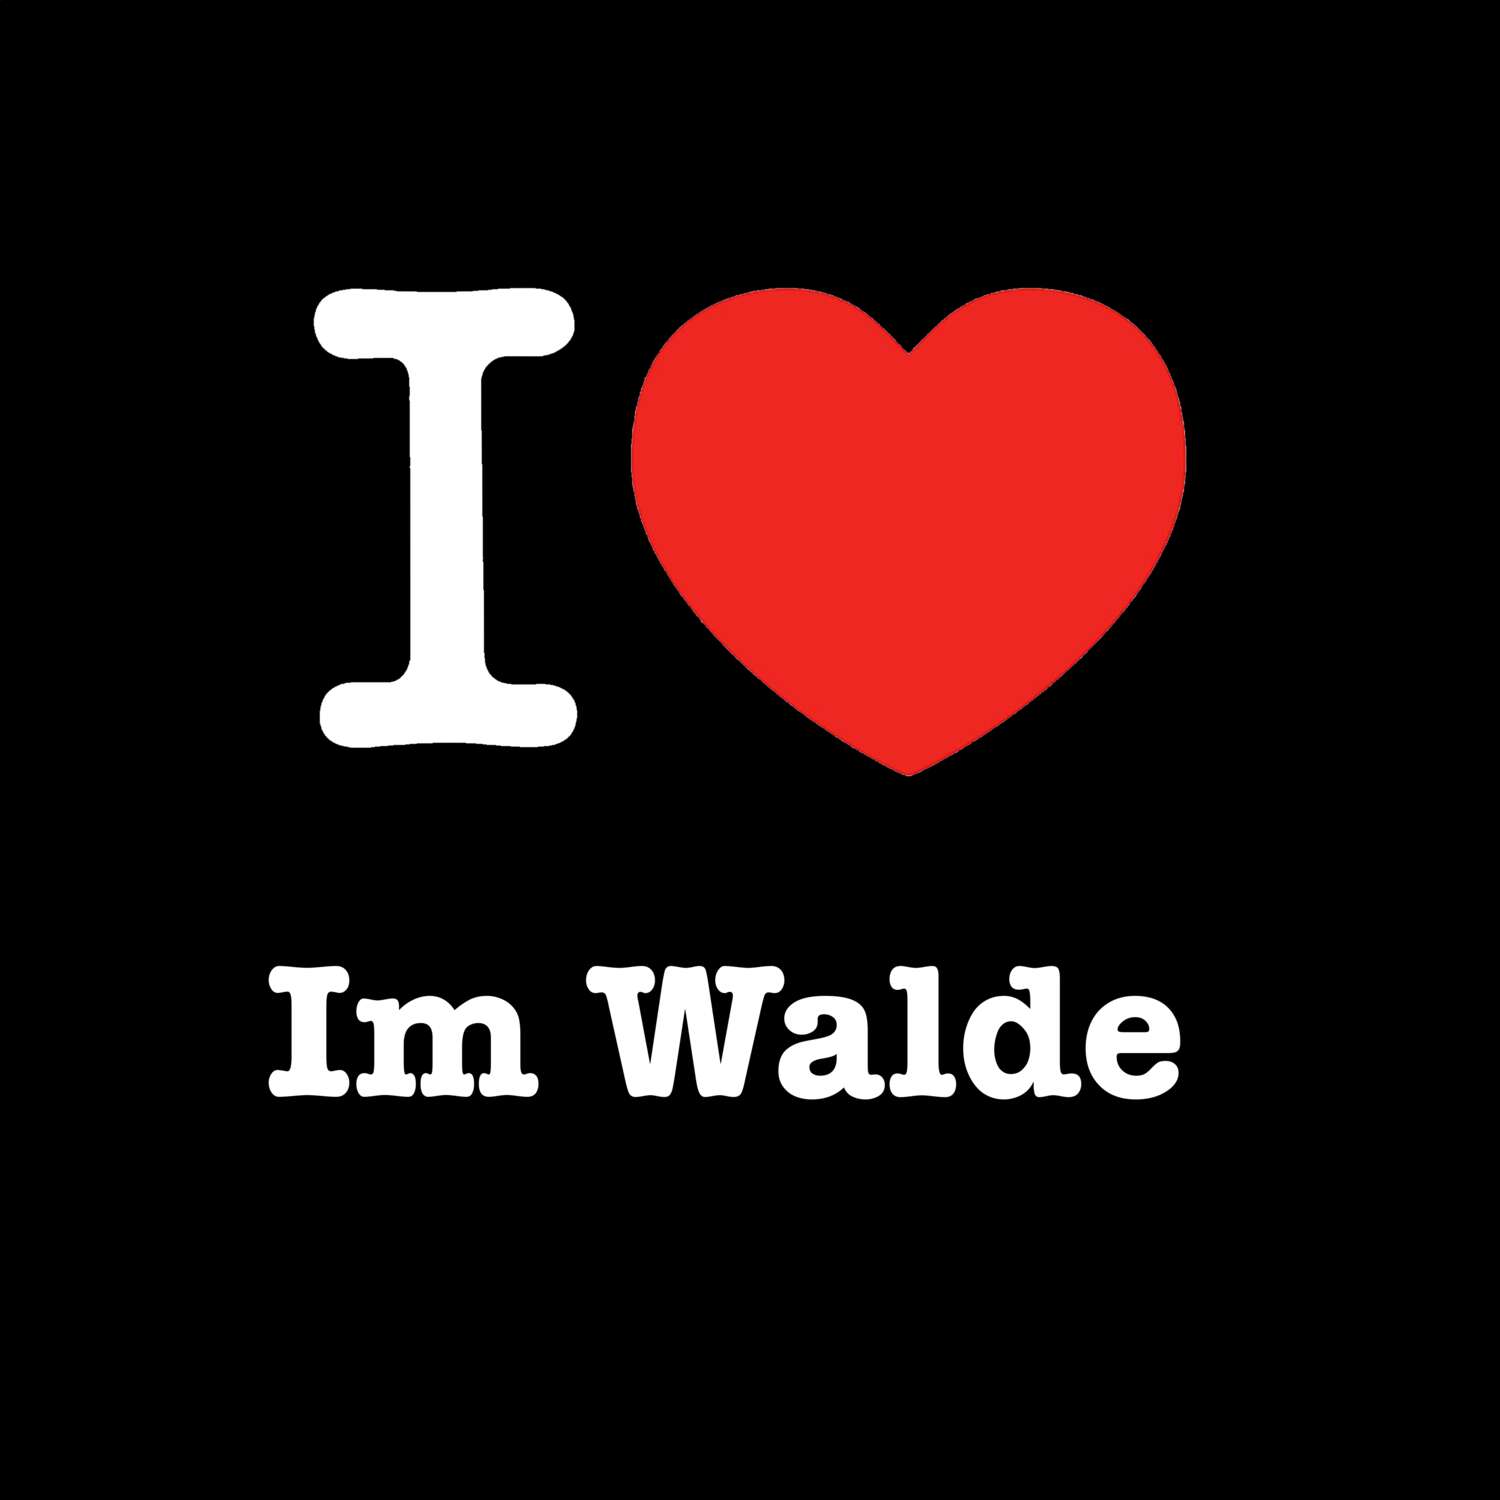 Im Walde T-Shirt »I love«